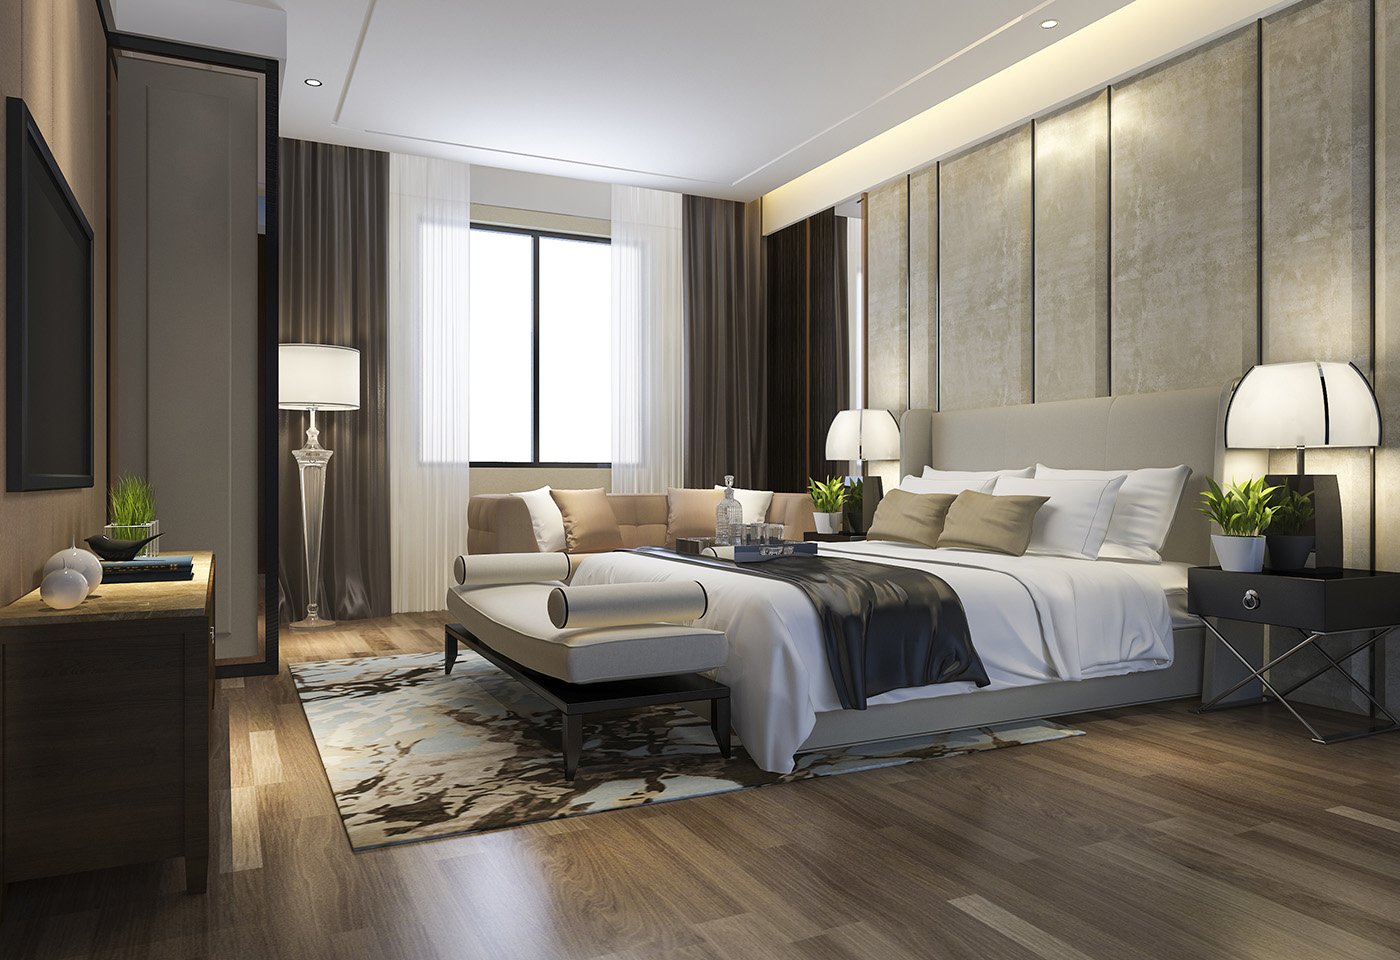 Discover more than 71 hospitality interior design courses latest